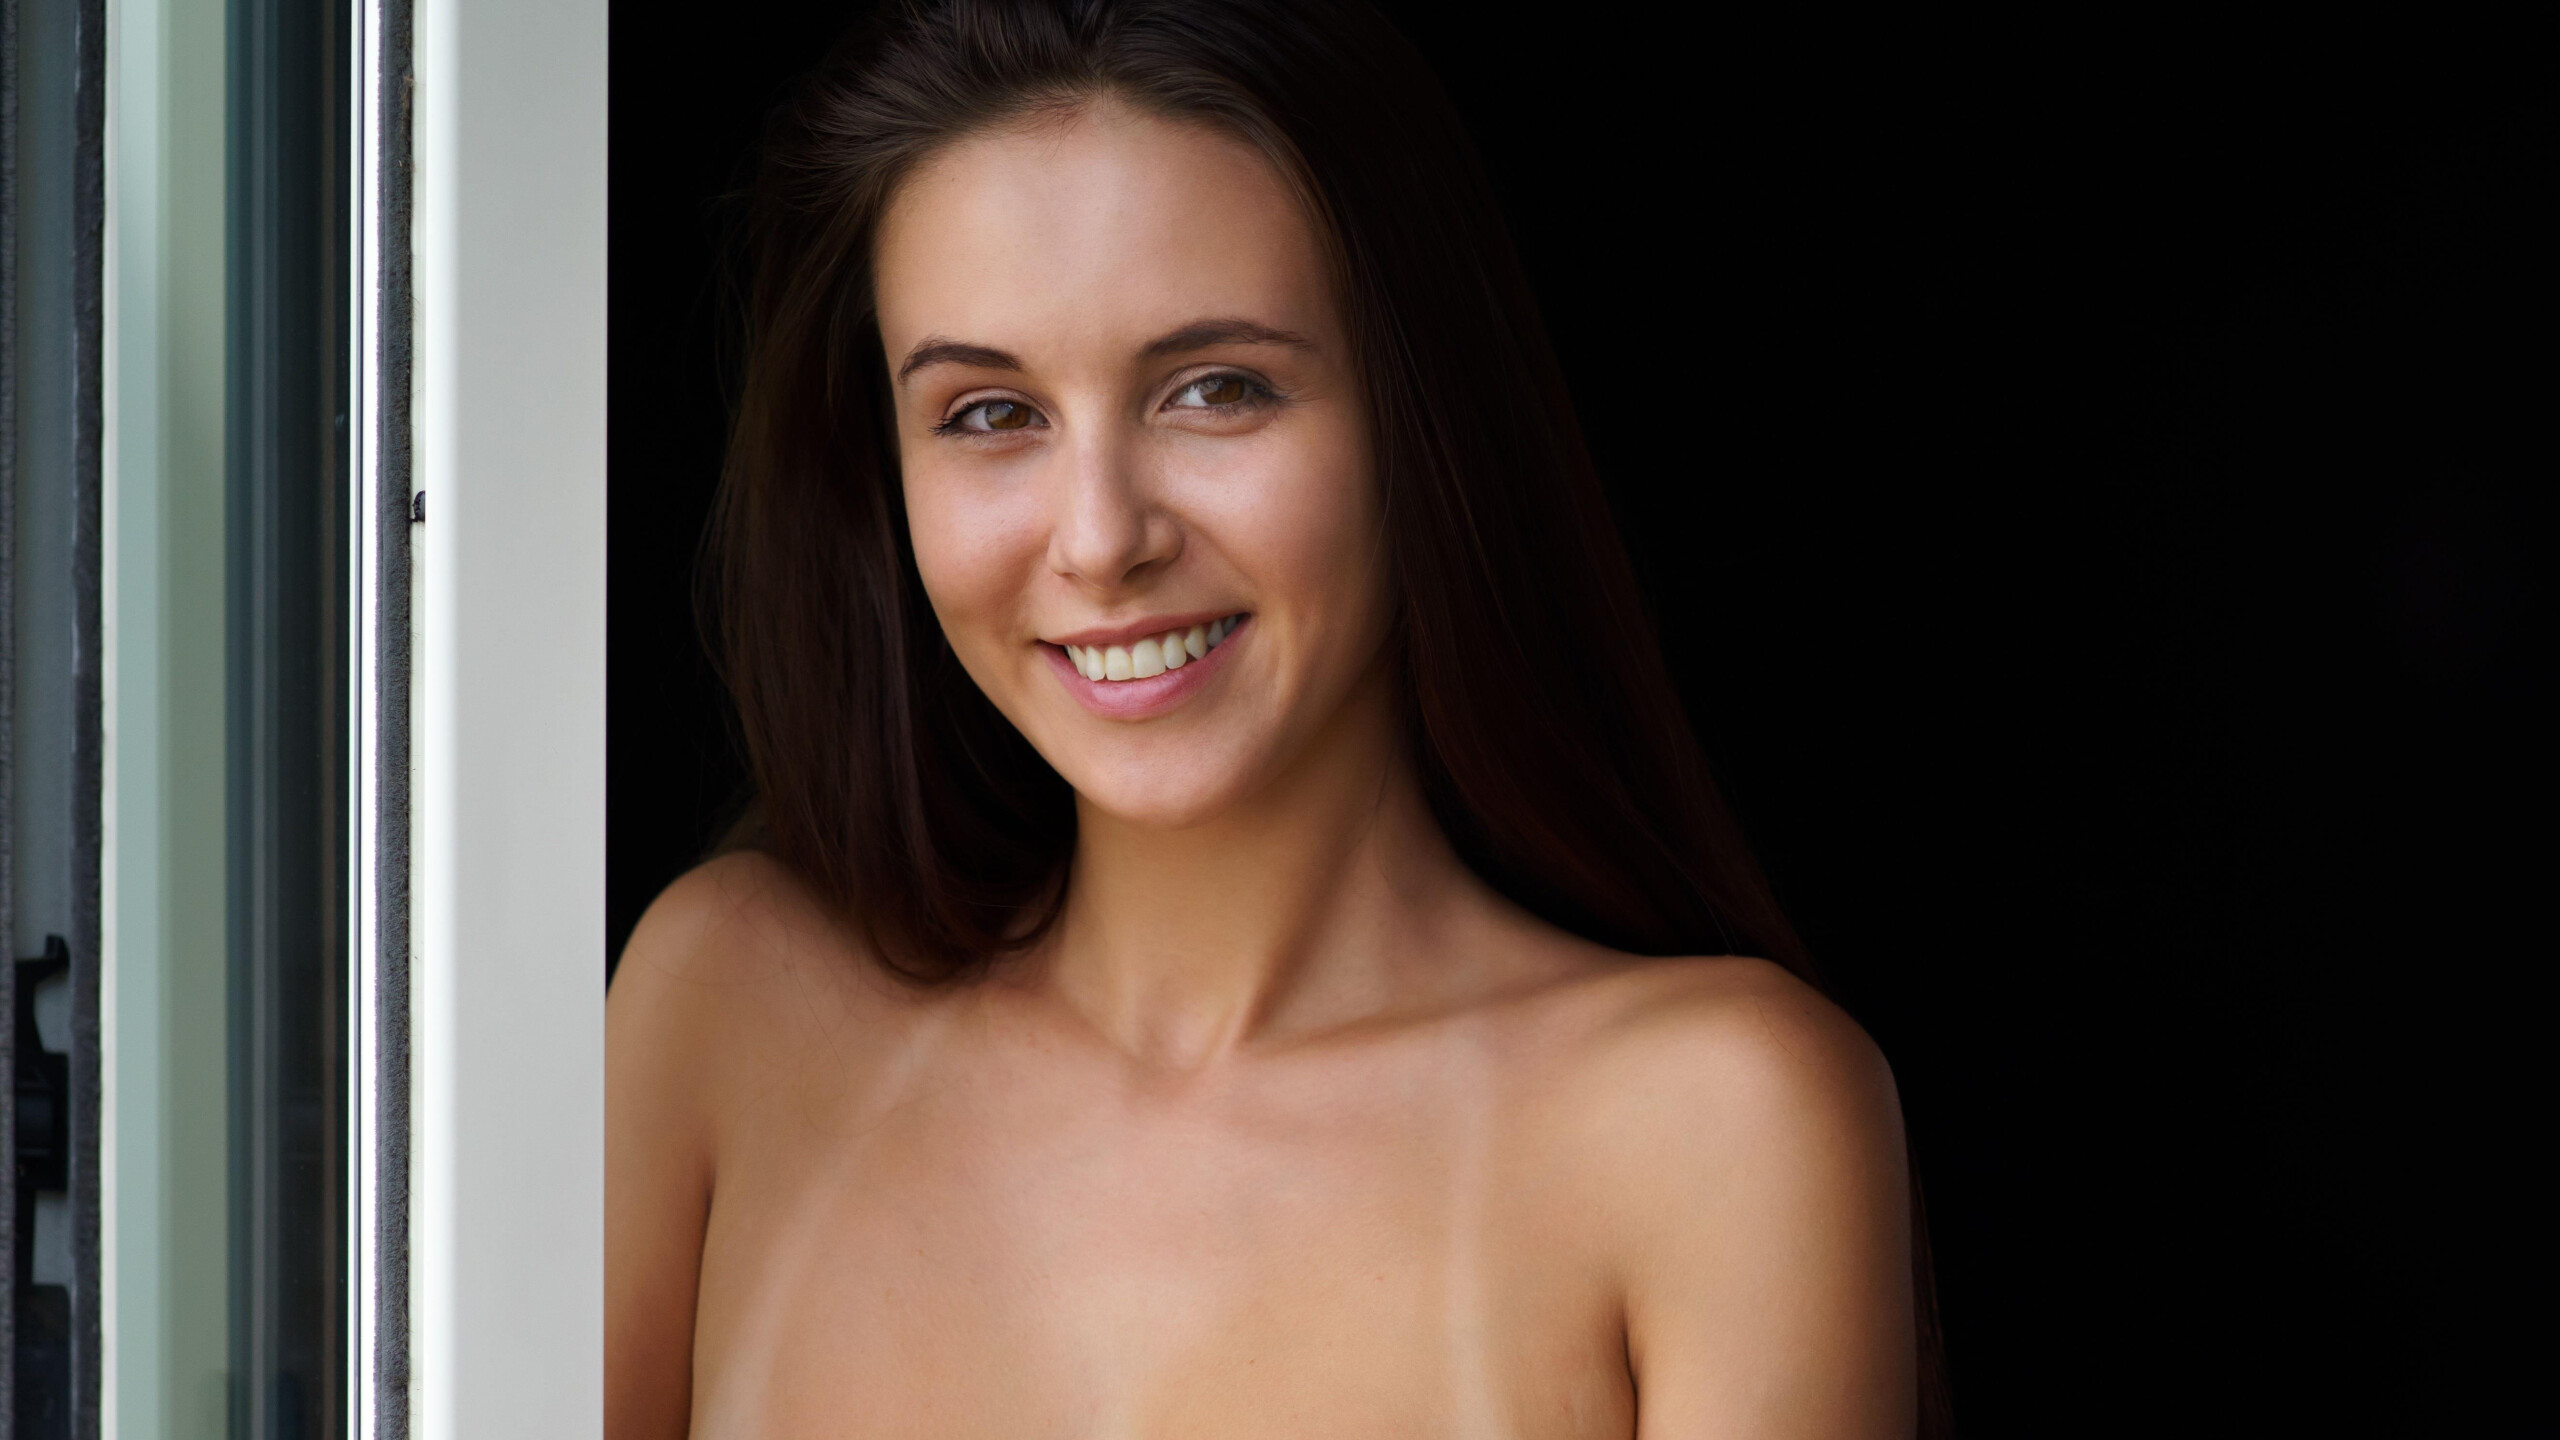 Nude Slim Smiling Tanned Busty Long-haired Alisa Amore Brunette Teen Girl Wallpaper #299